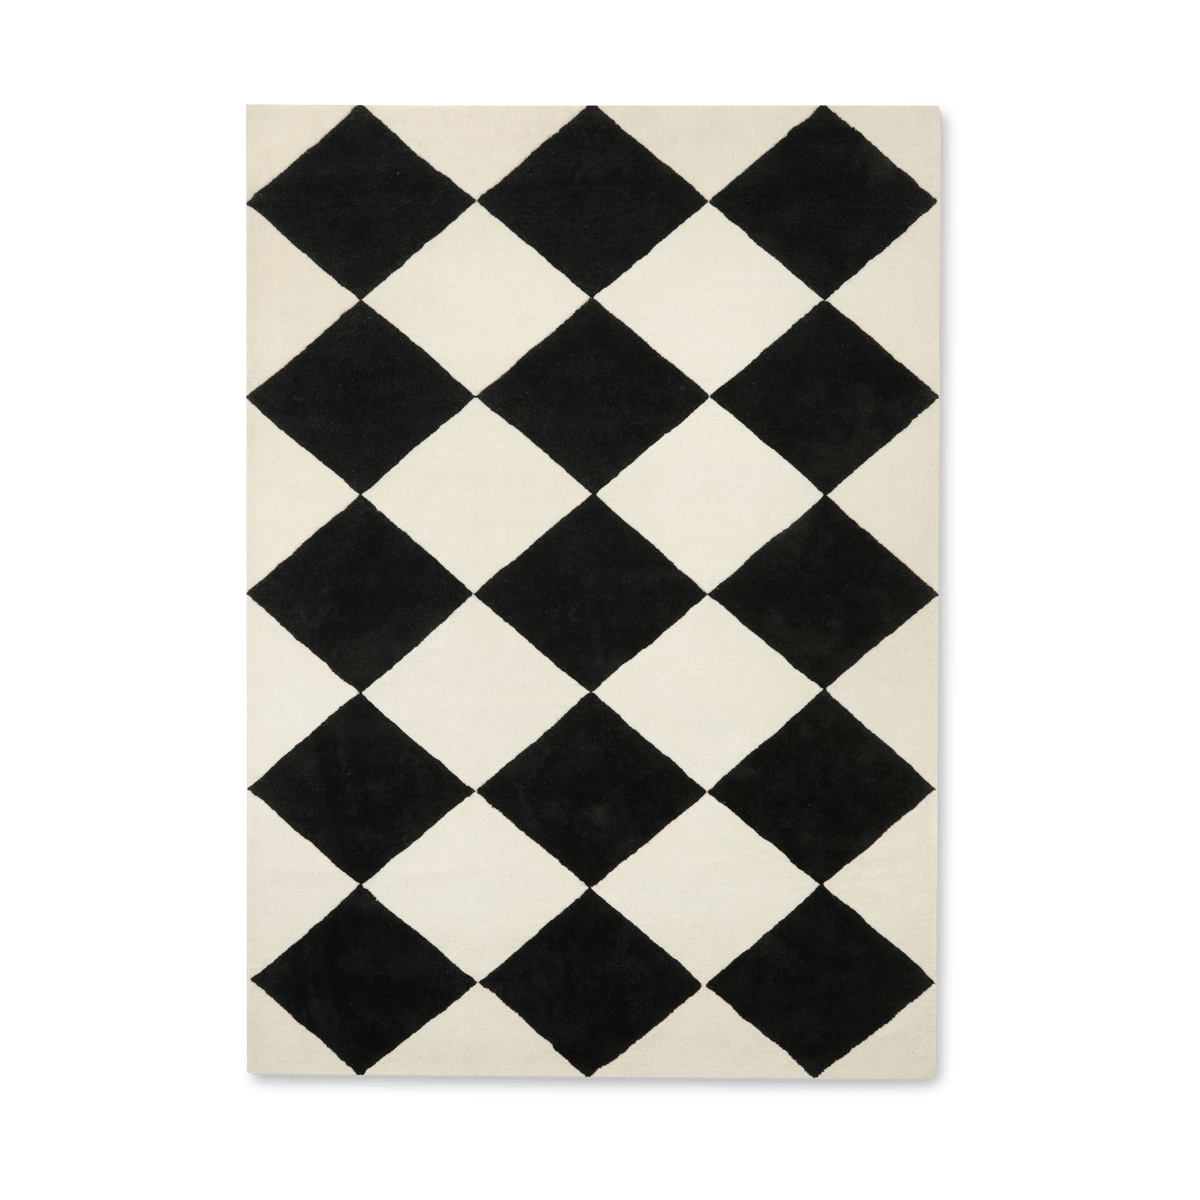 Tinted Tenman villamatto 200×300 cm Black-white